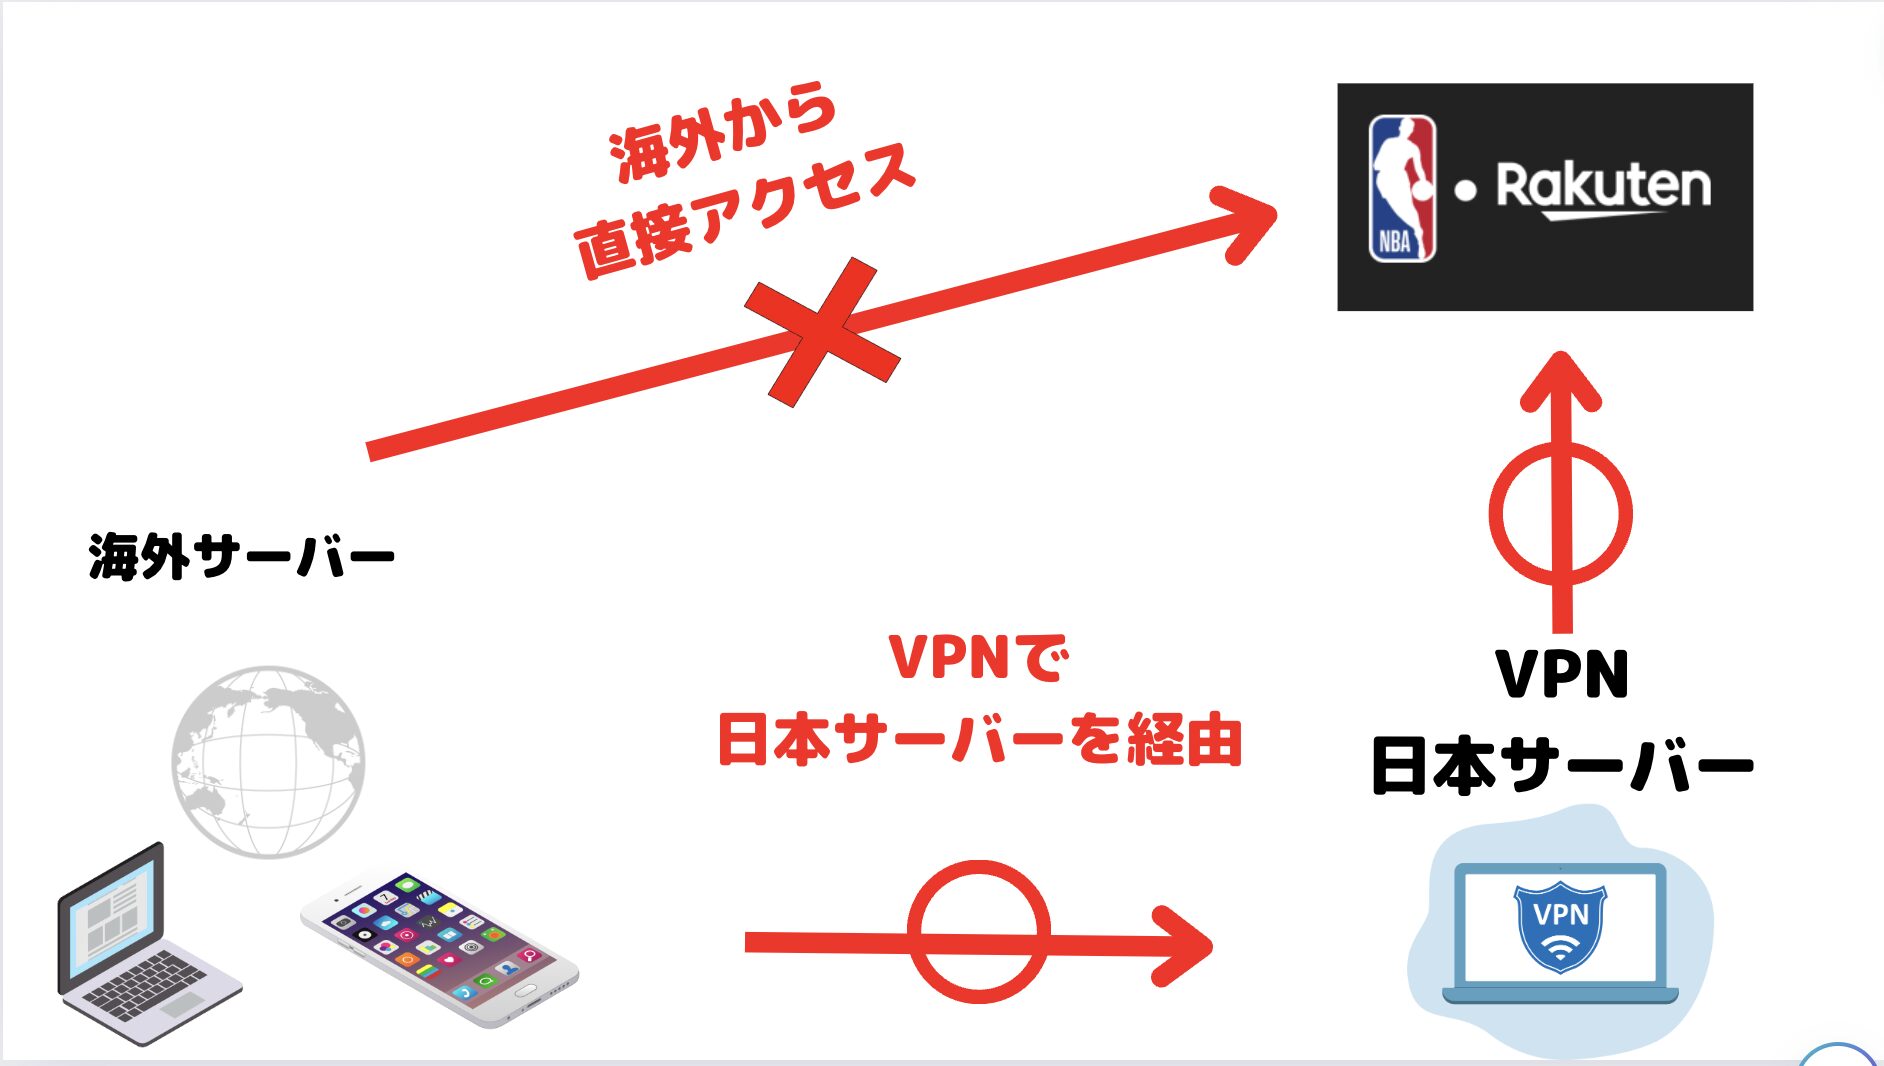 VPNを使って海外から楽天NBAを見れる仕組み